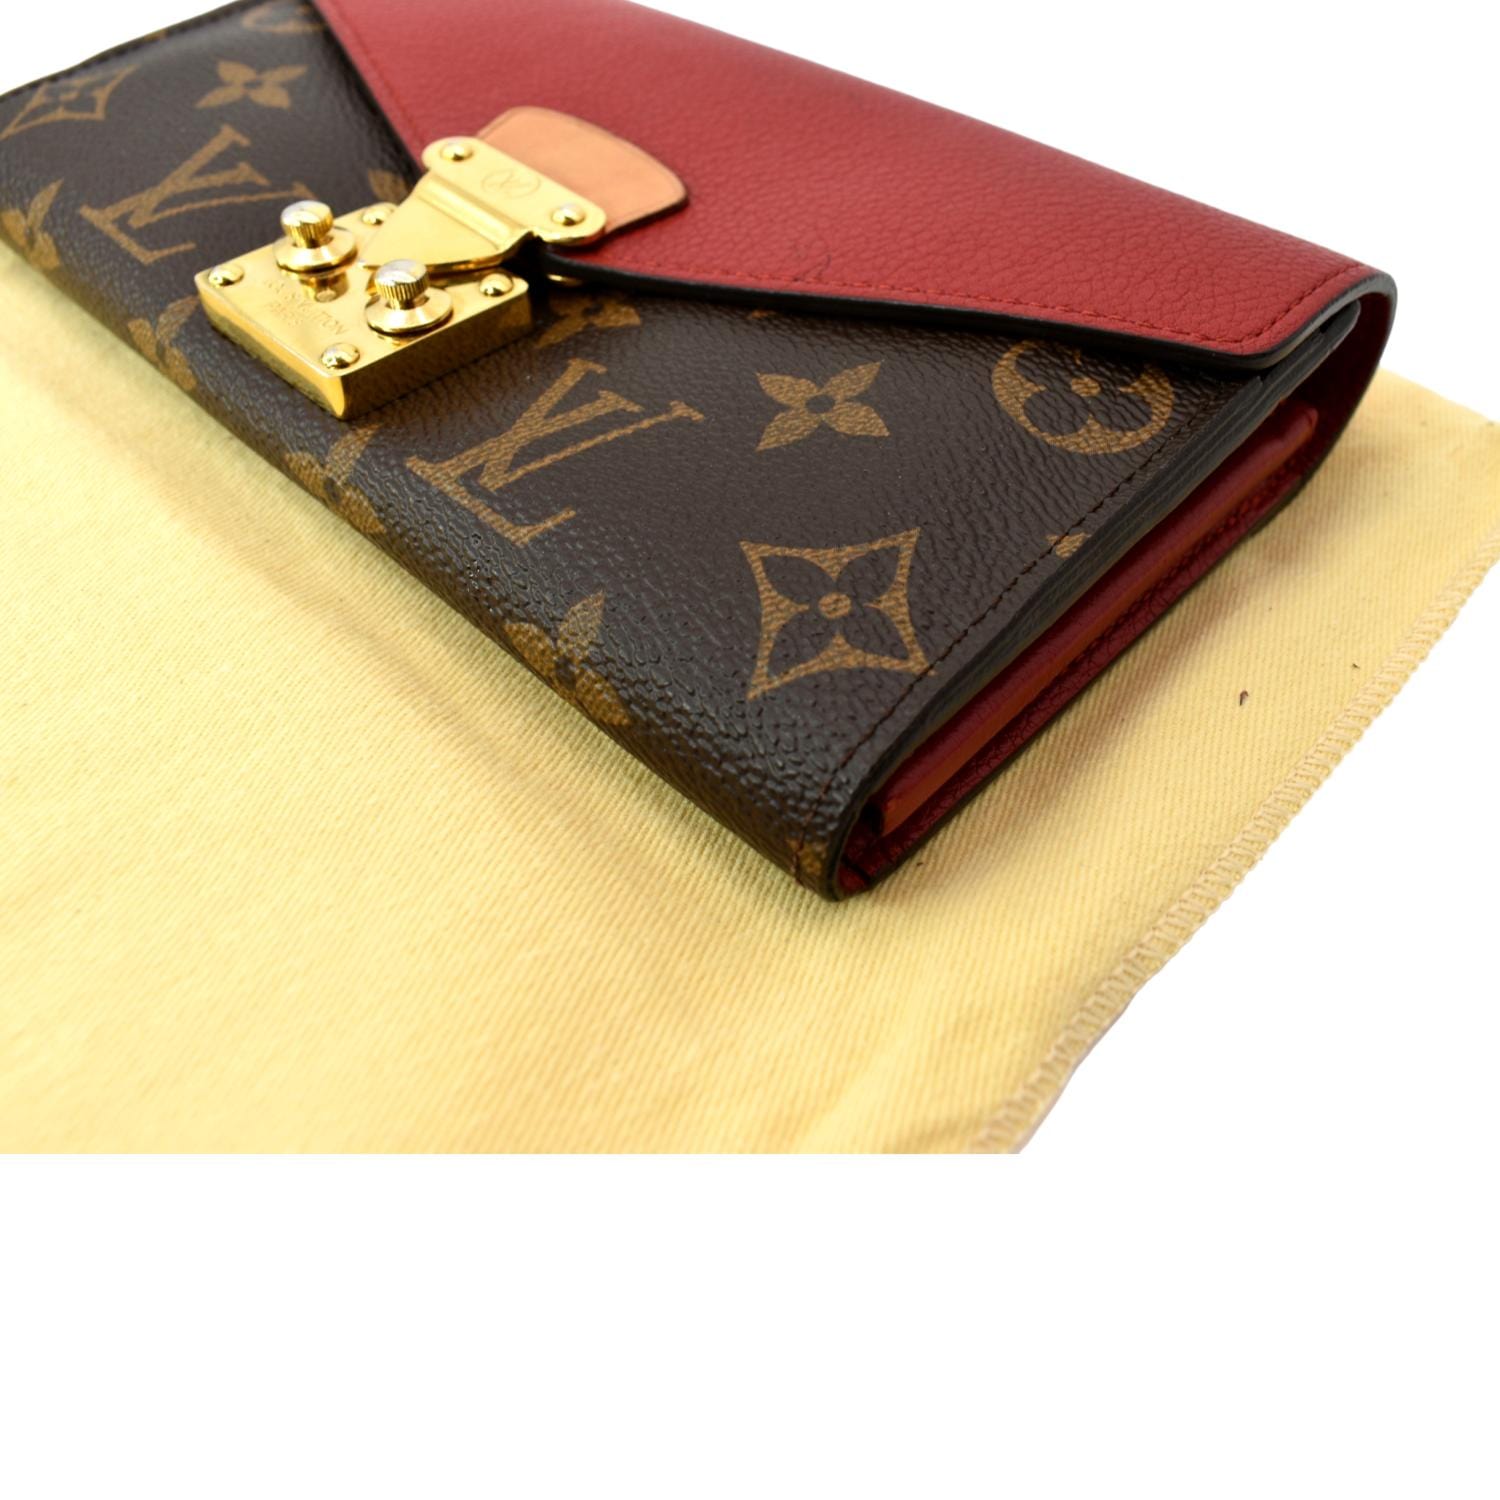 Sold at Auction: A Louis Vuitton Python Monogram Pallas Wallet